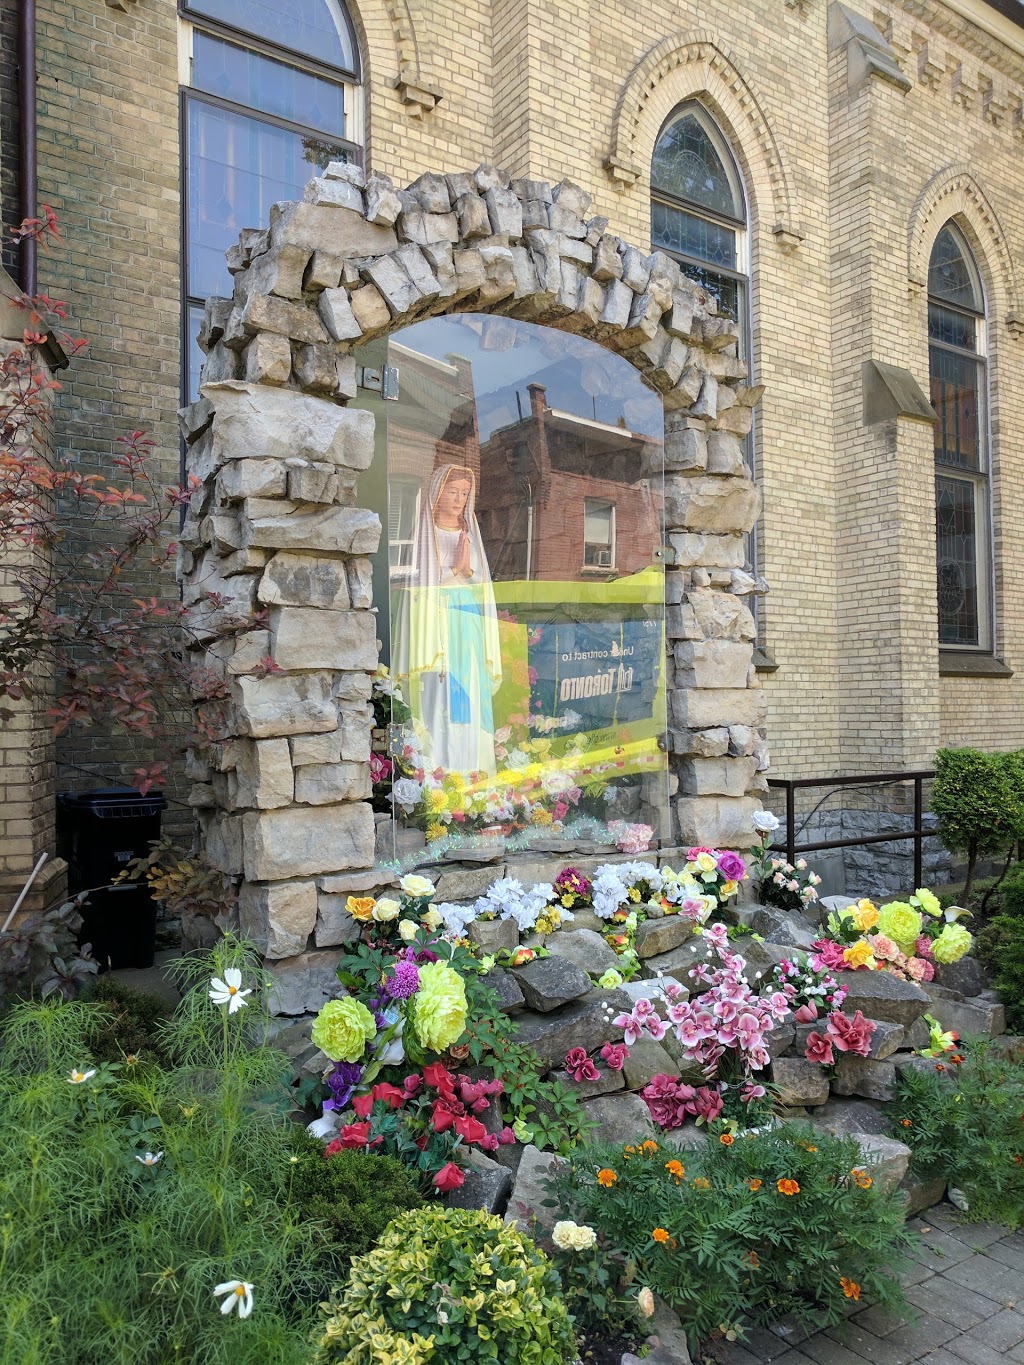 St.Stanislaus Kostka Church | church | 12 Denison Ave, Toronto, ON M5T 2M4, Canada | 4165044643 OR +1 416-504-4643